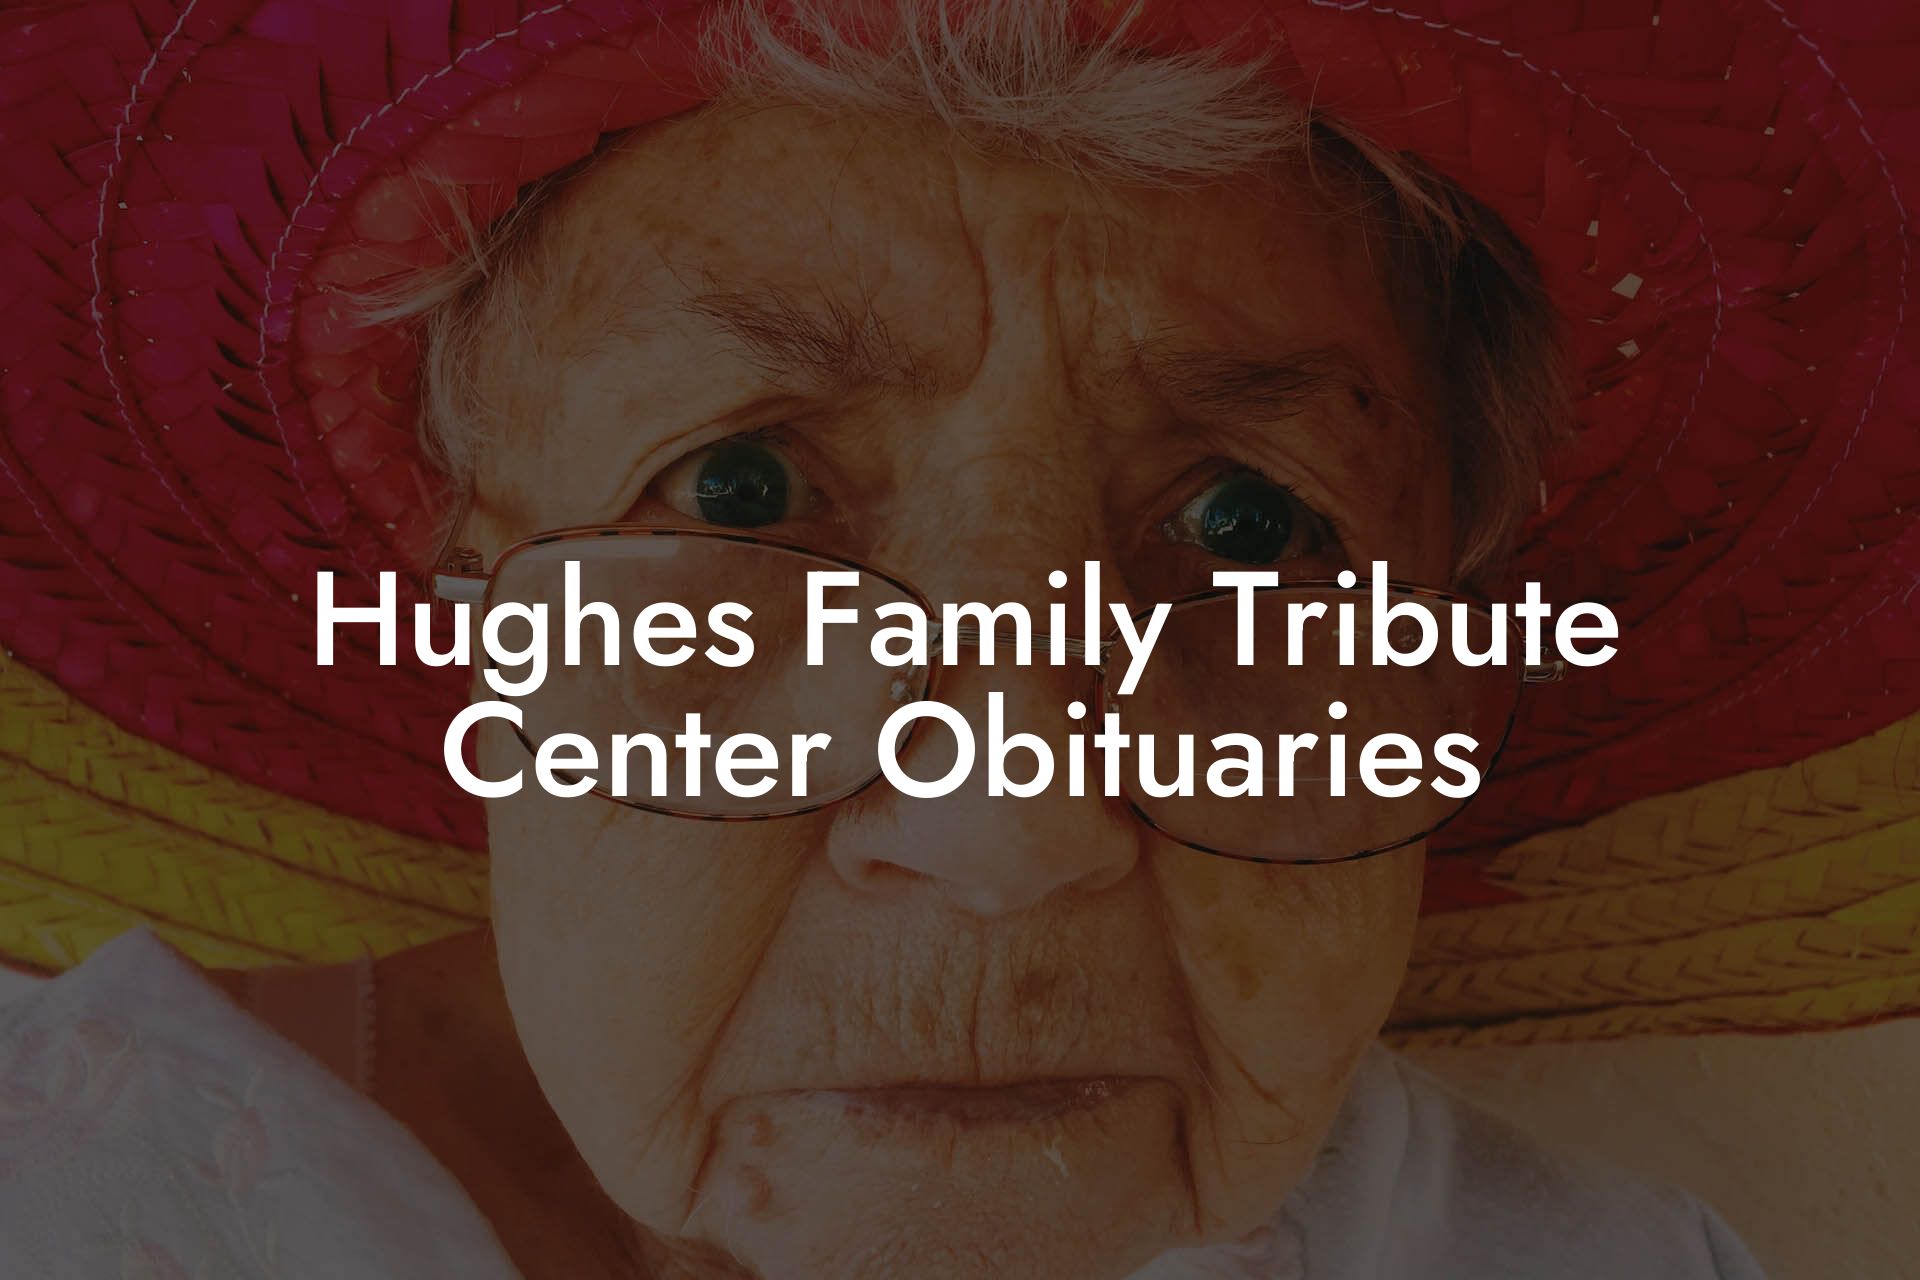 Hughes Family Tribute Center Obituaries